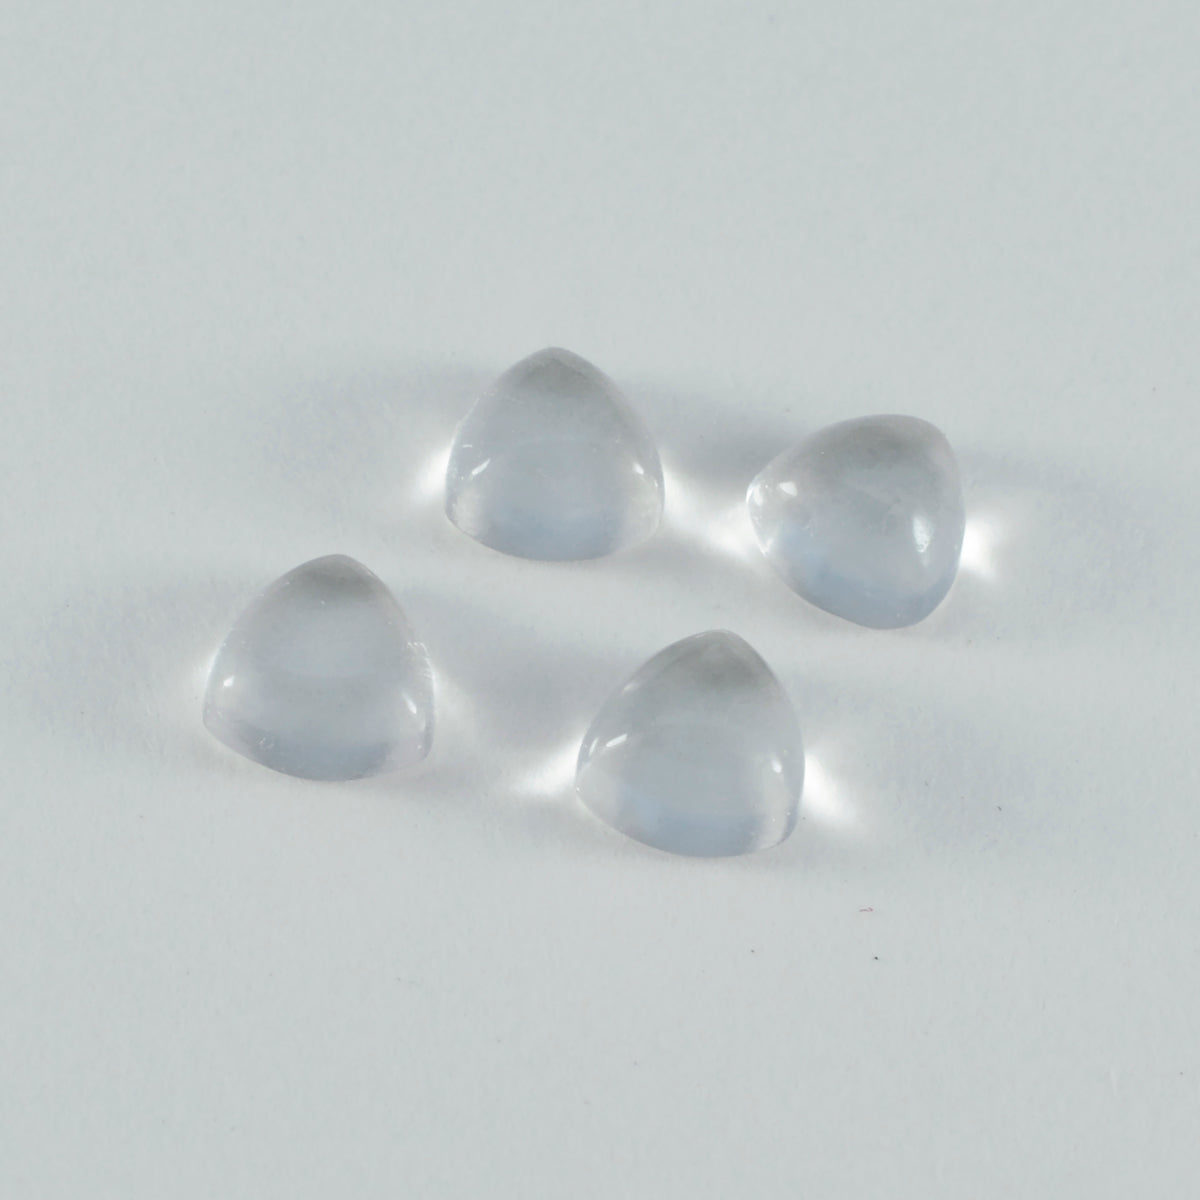 Riyogems 1PC White Crystal Quartz Cabochon 7x7 mm Trillion Shape startling Quality Gems